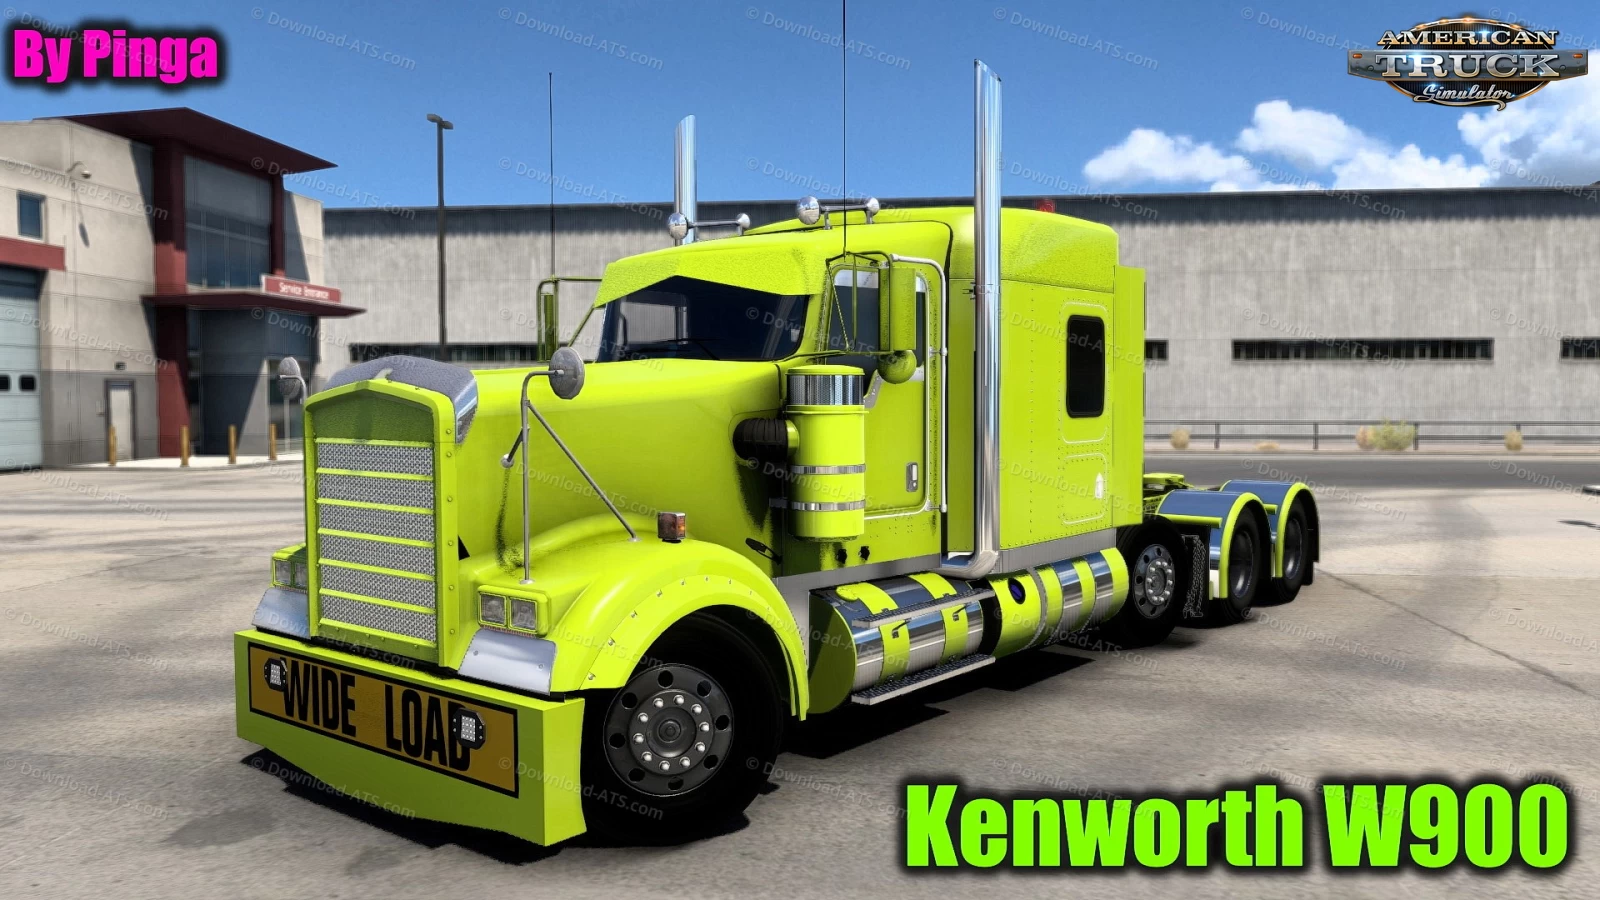 Kenworth W900 + Interior v2.0 Edit by Pinga (1.46.x) for ATS